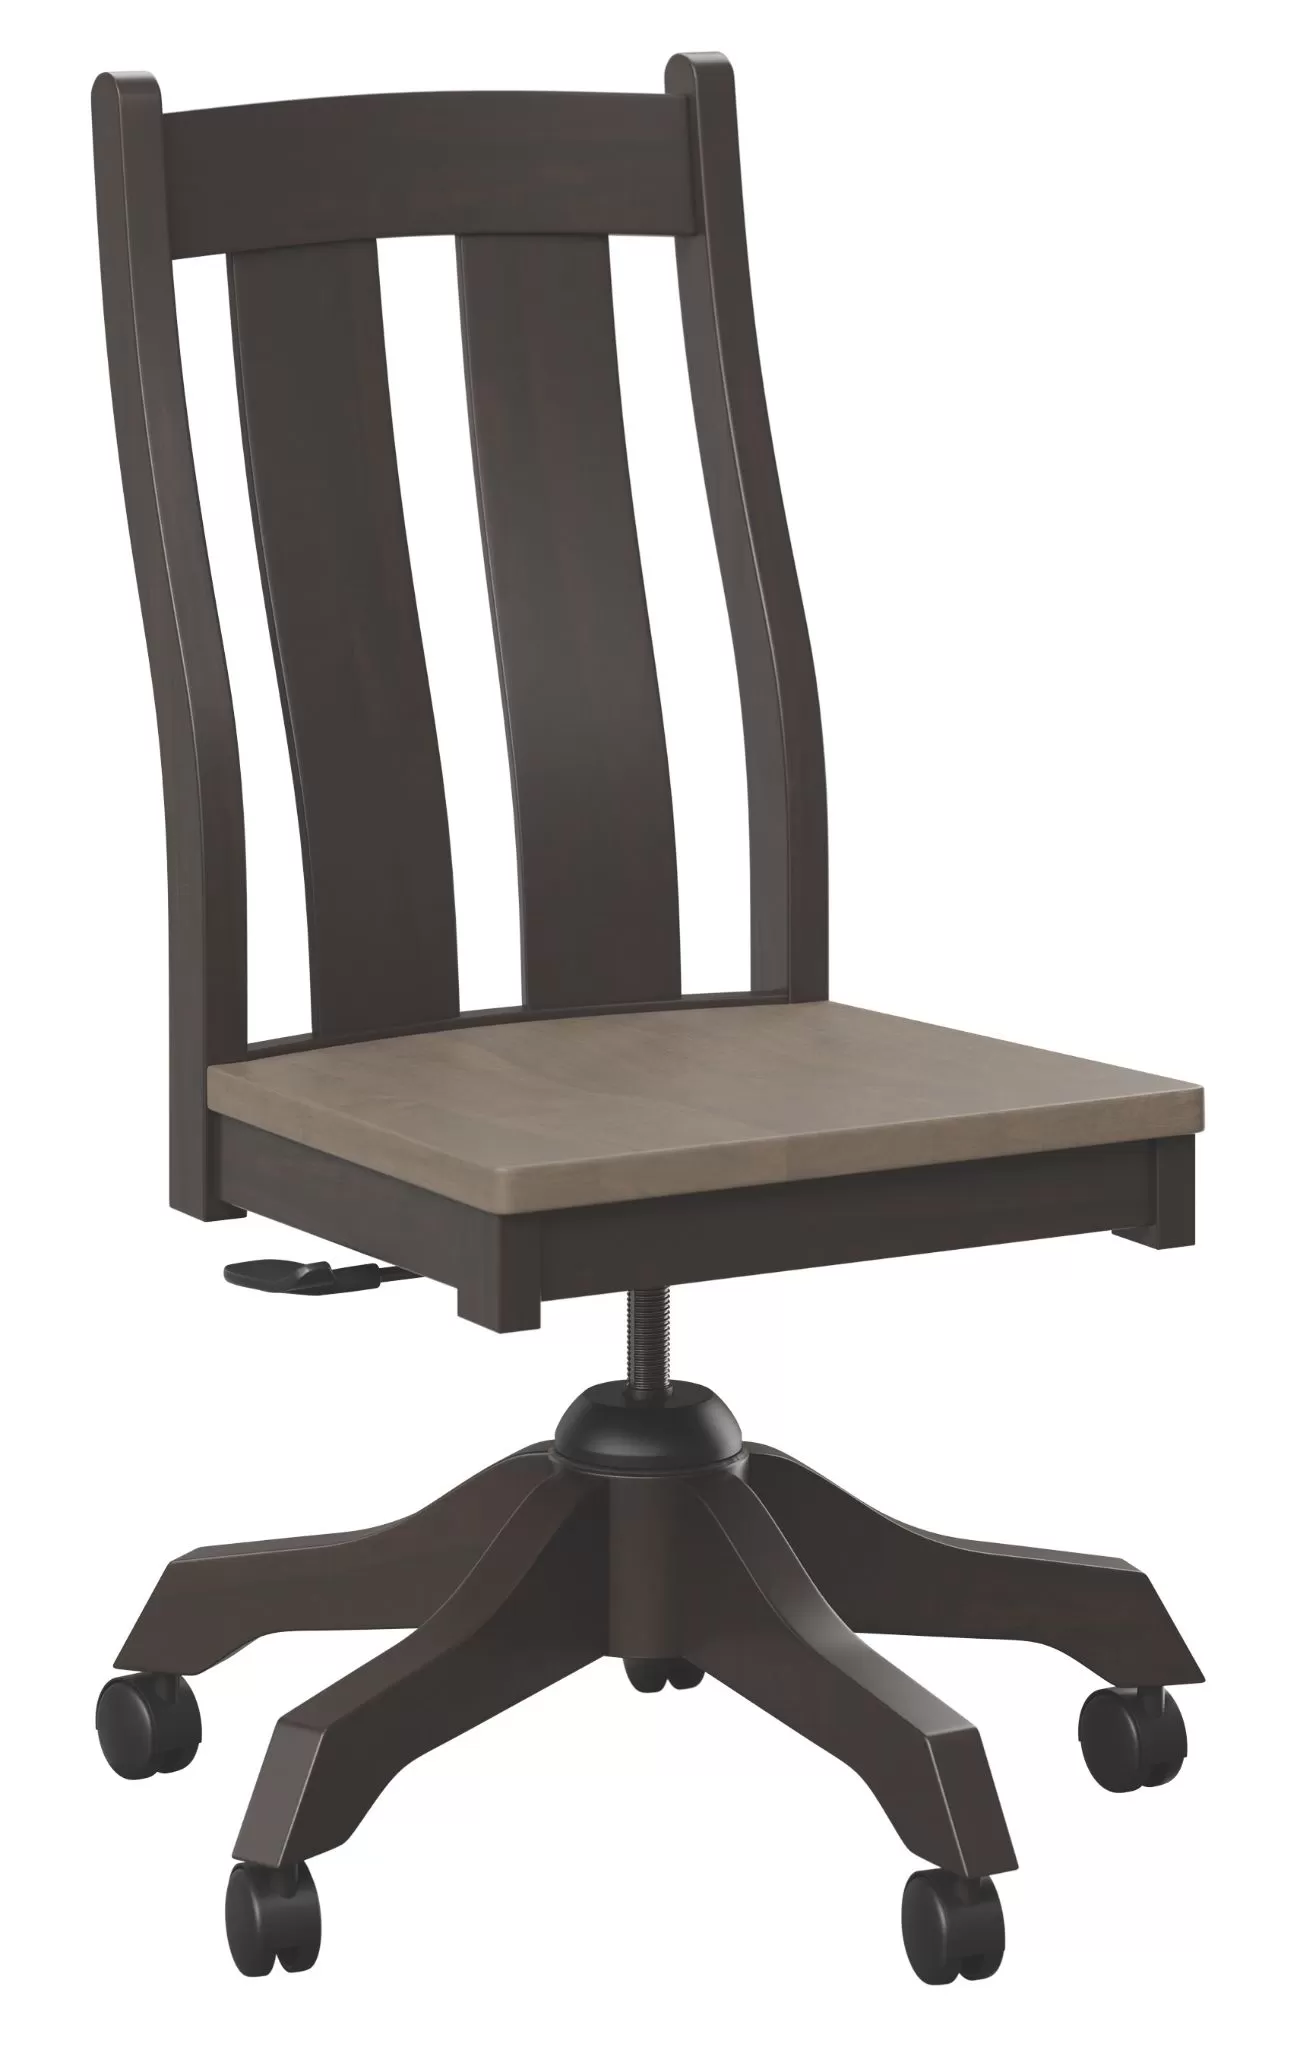 Arlington side desk chair